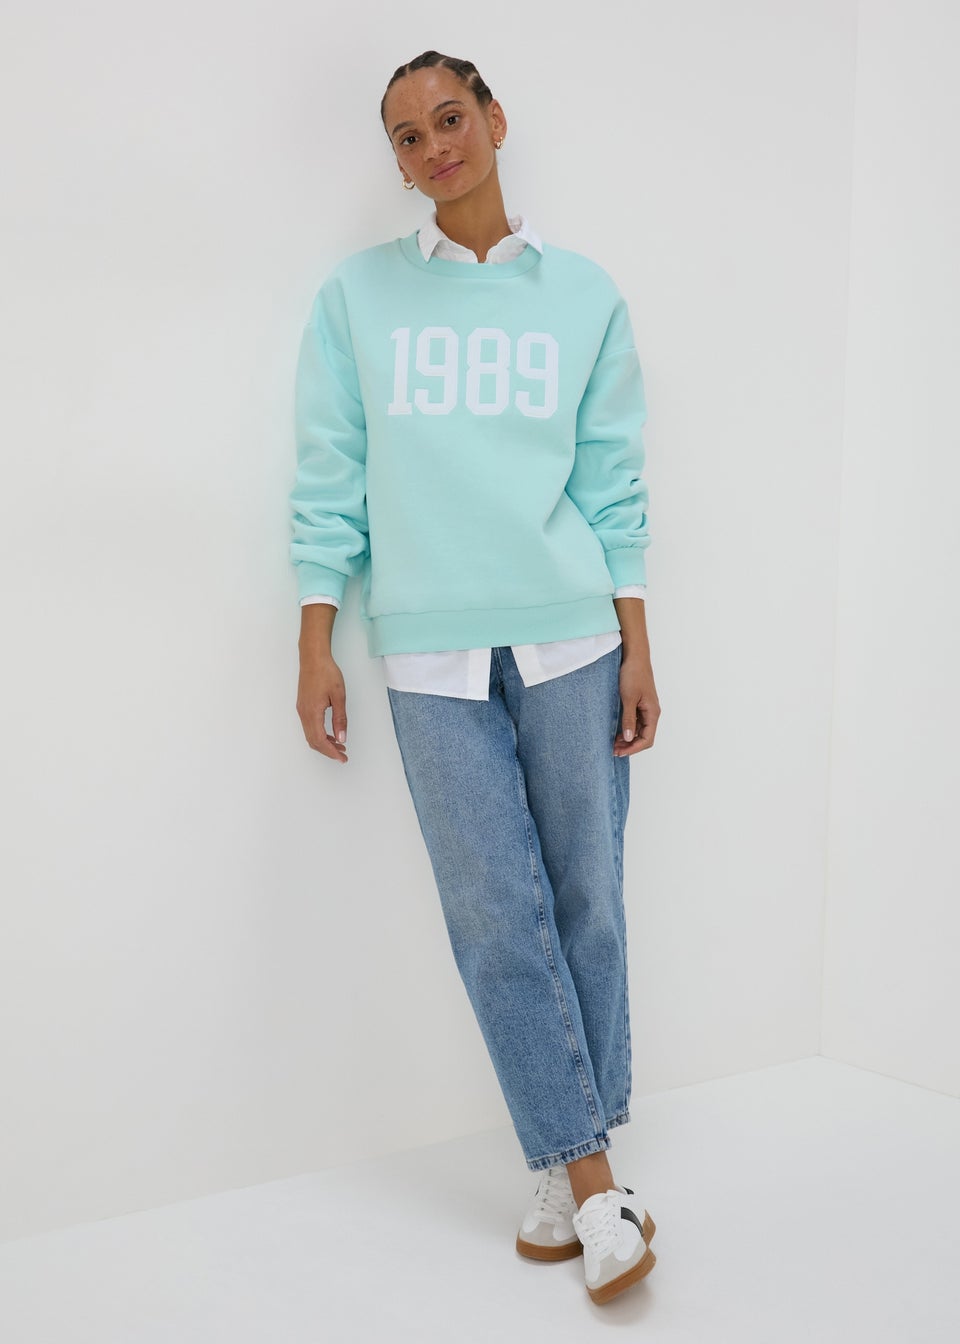 Blue 1989 Co Ord Sweatshirt